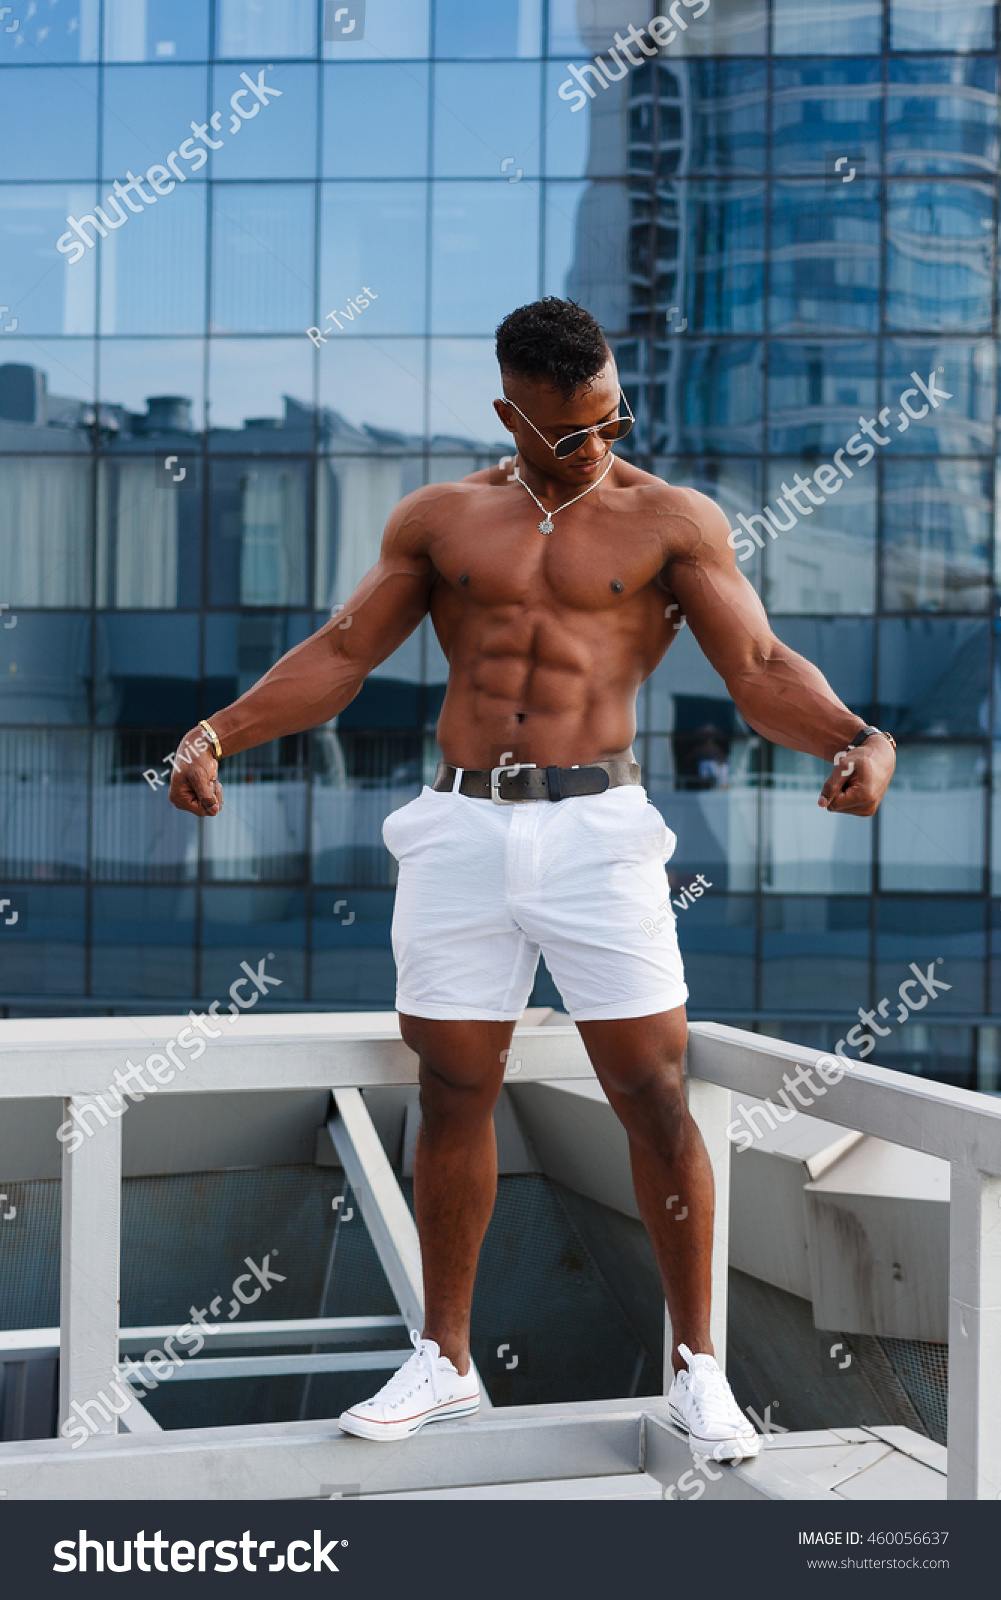 diane kubal share man bulge pics photos